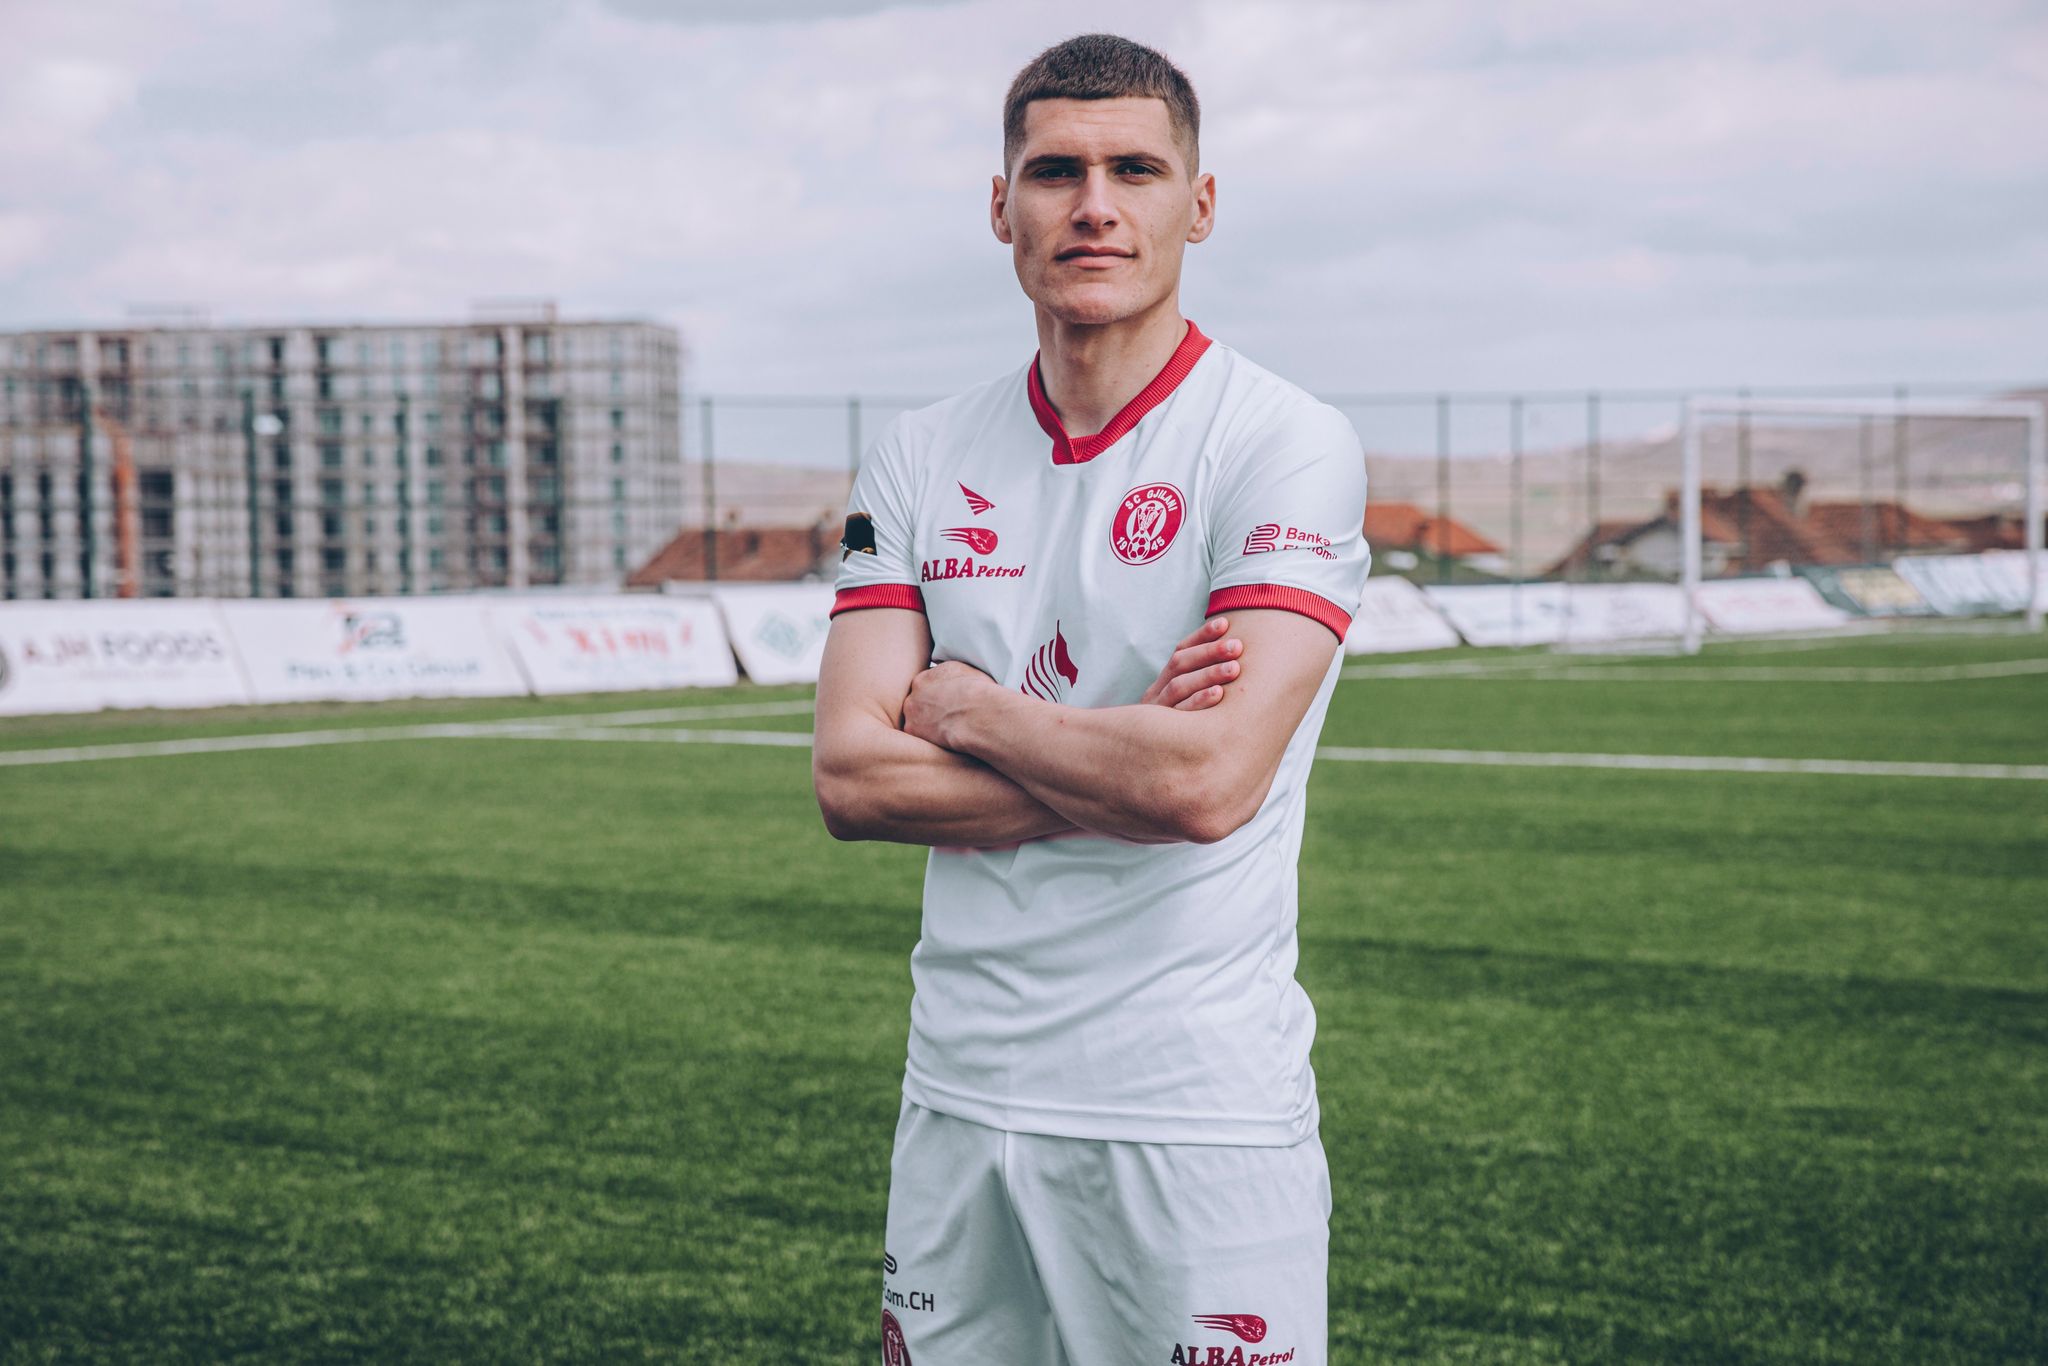 Zyrtare: SC Gjilani transferon mesfushorin Shqiprim Taipi